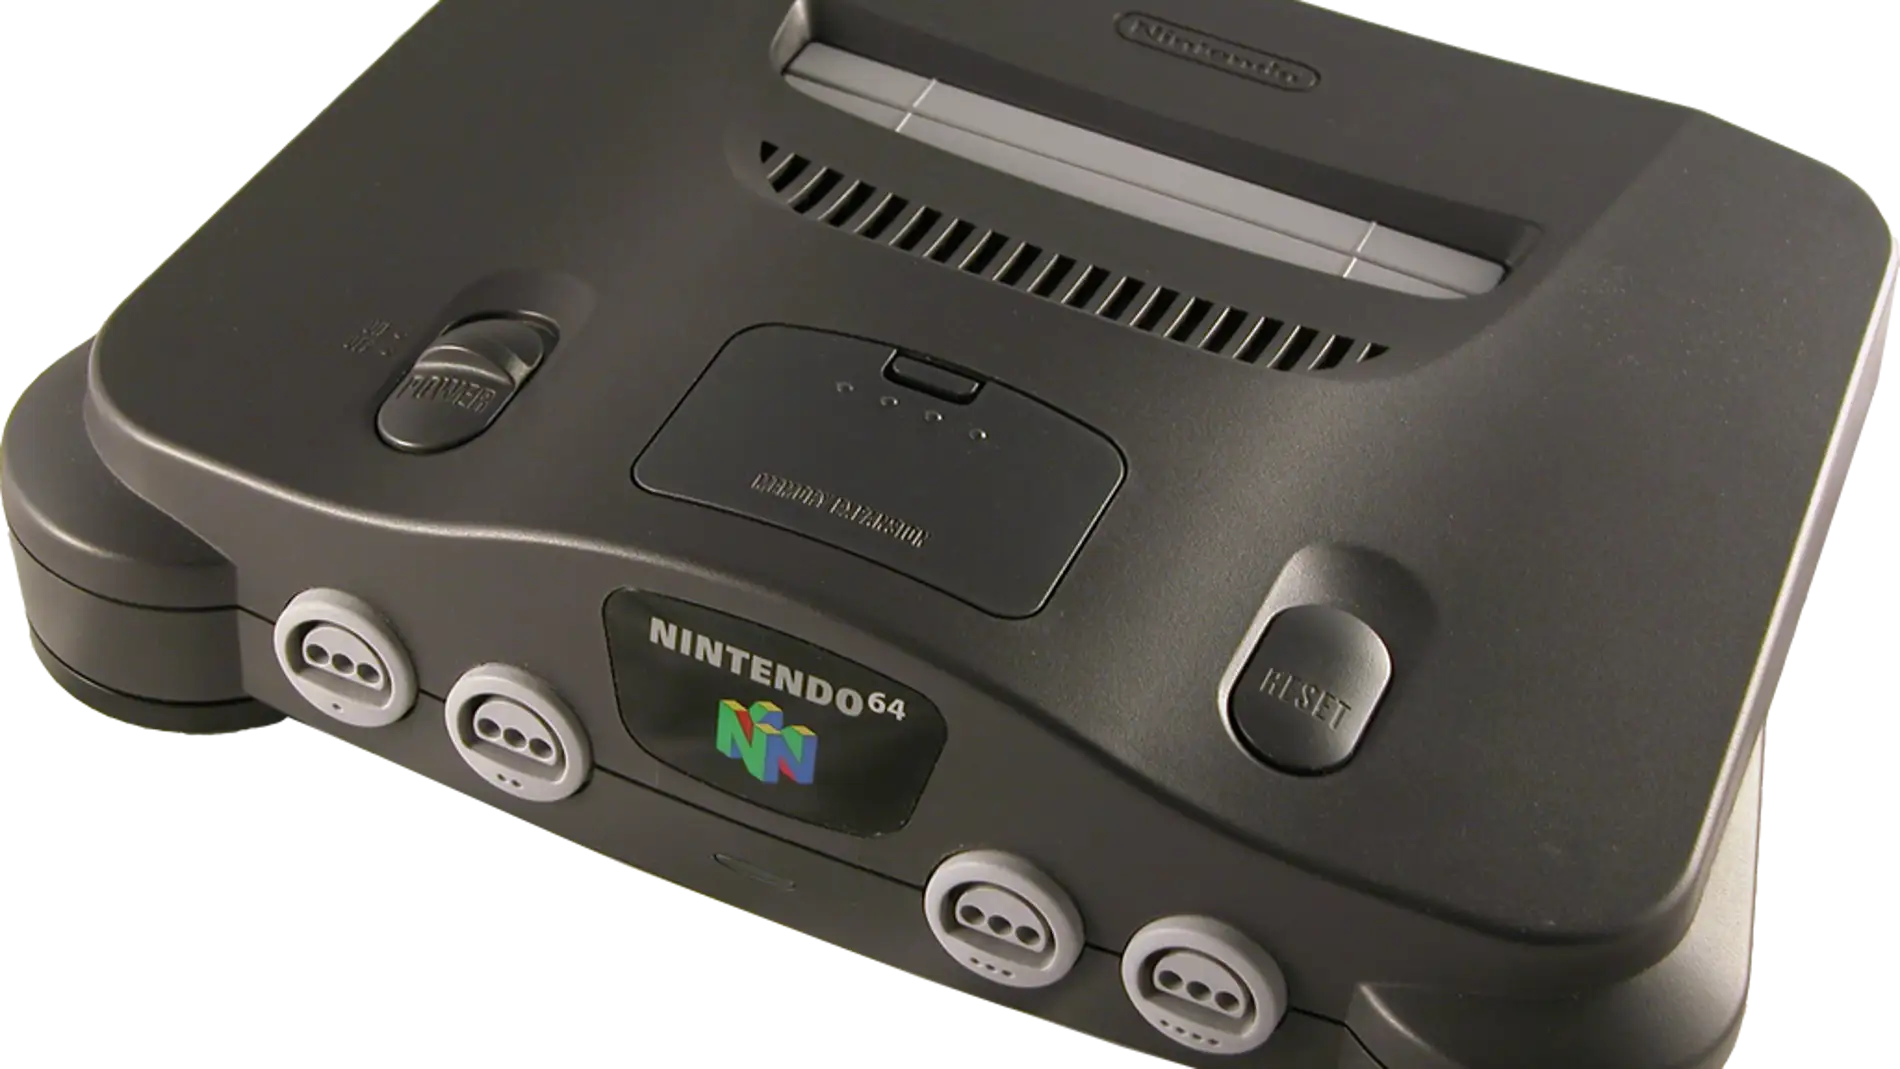 Nintendo 64